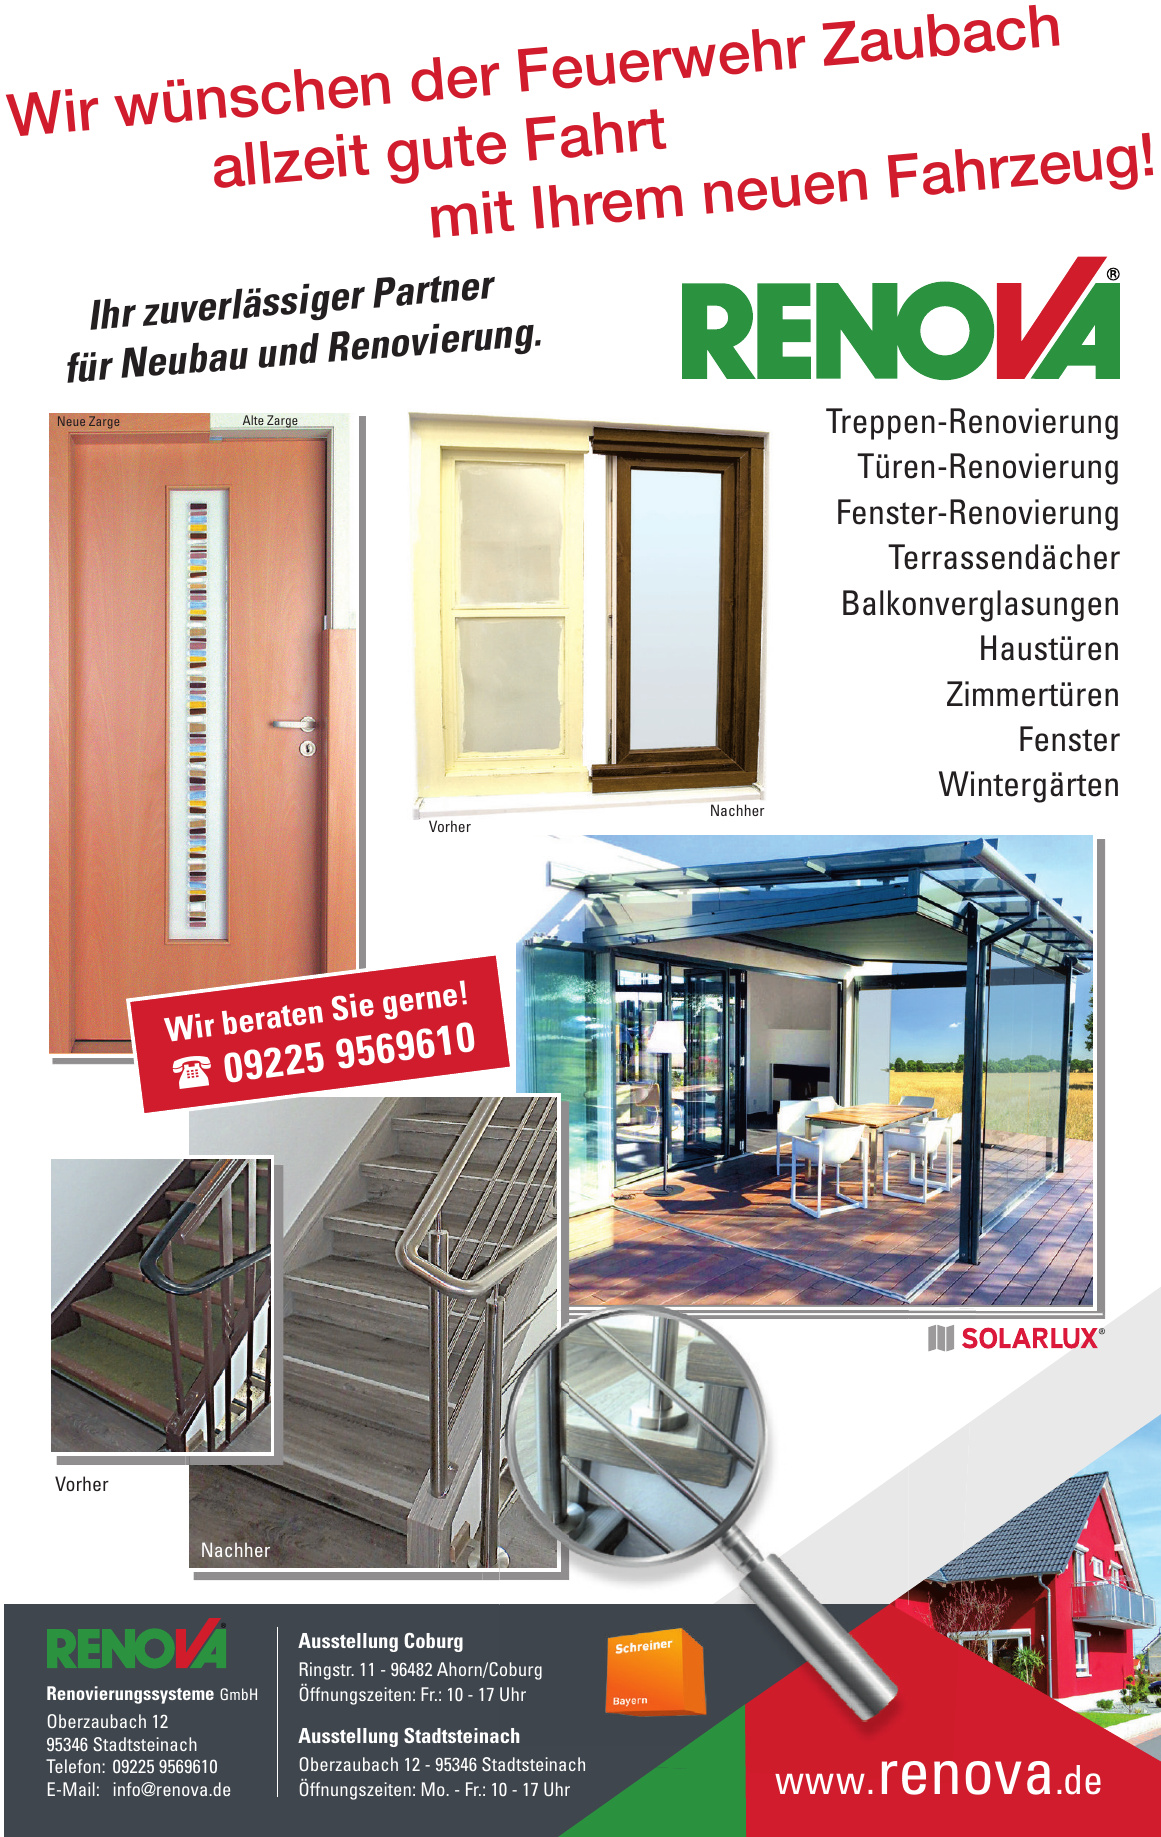 RENOVA Renovierungssysteme GmbH